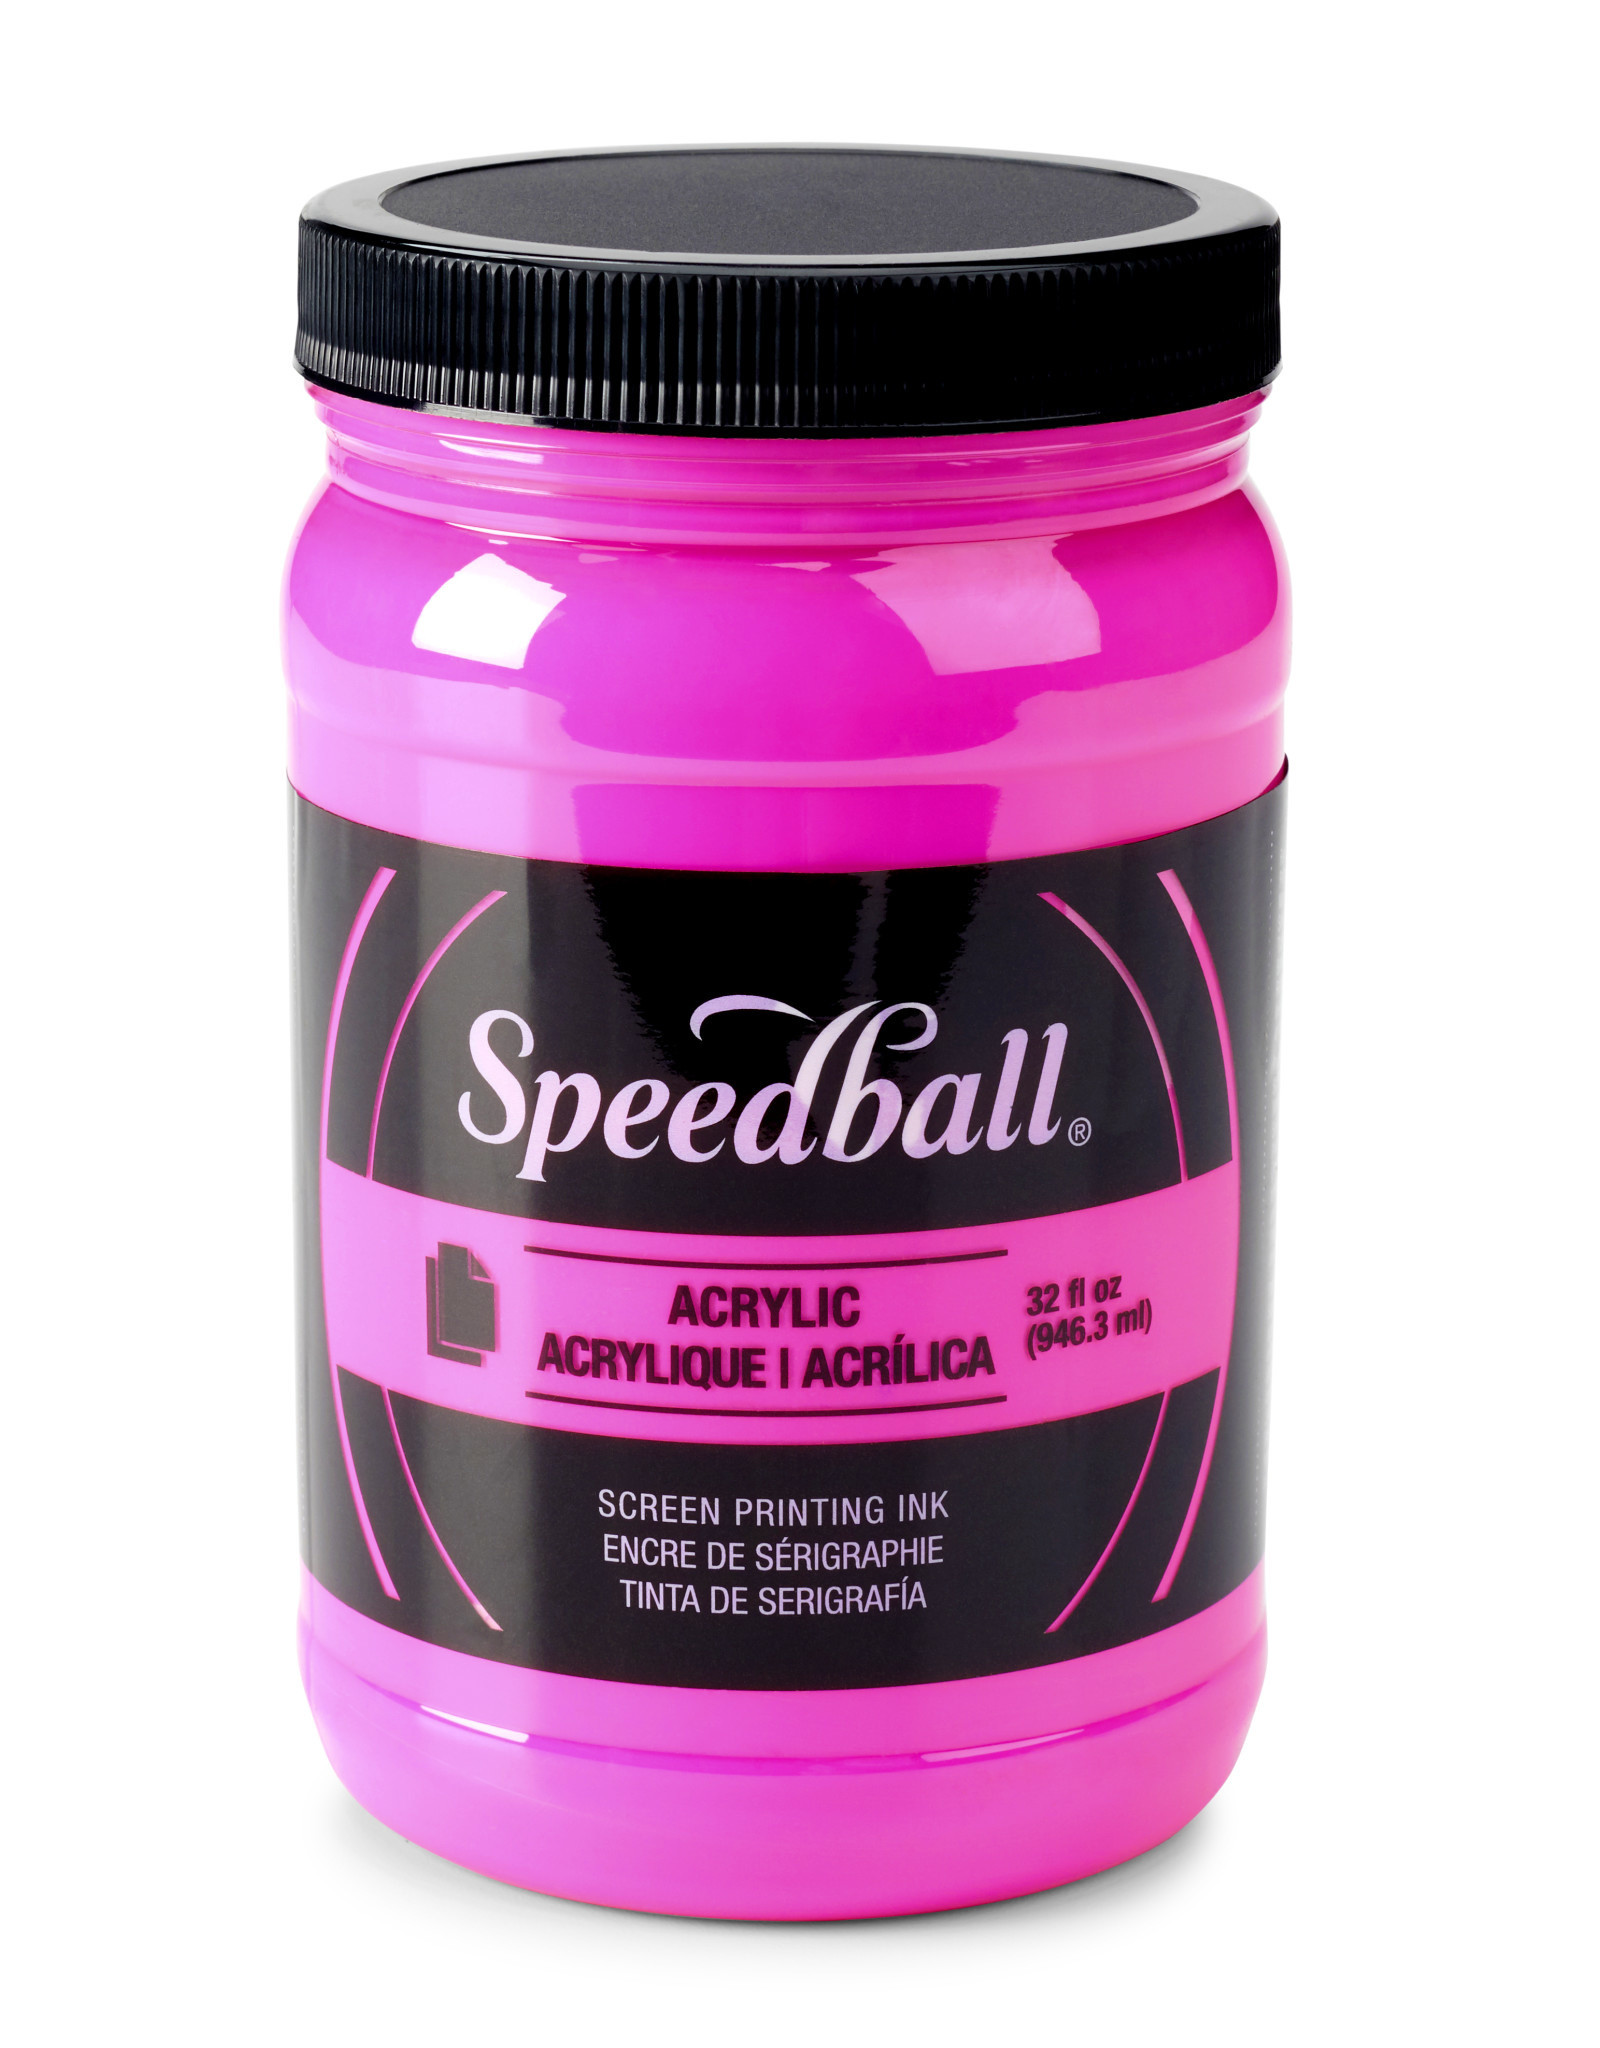 SPEEDBALL ART PRODUCTS Speedball Acrylic Screen Printing Ink, Fluorescent Magenta, 32oz